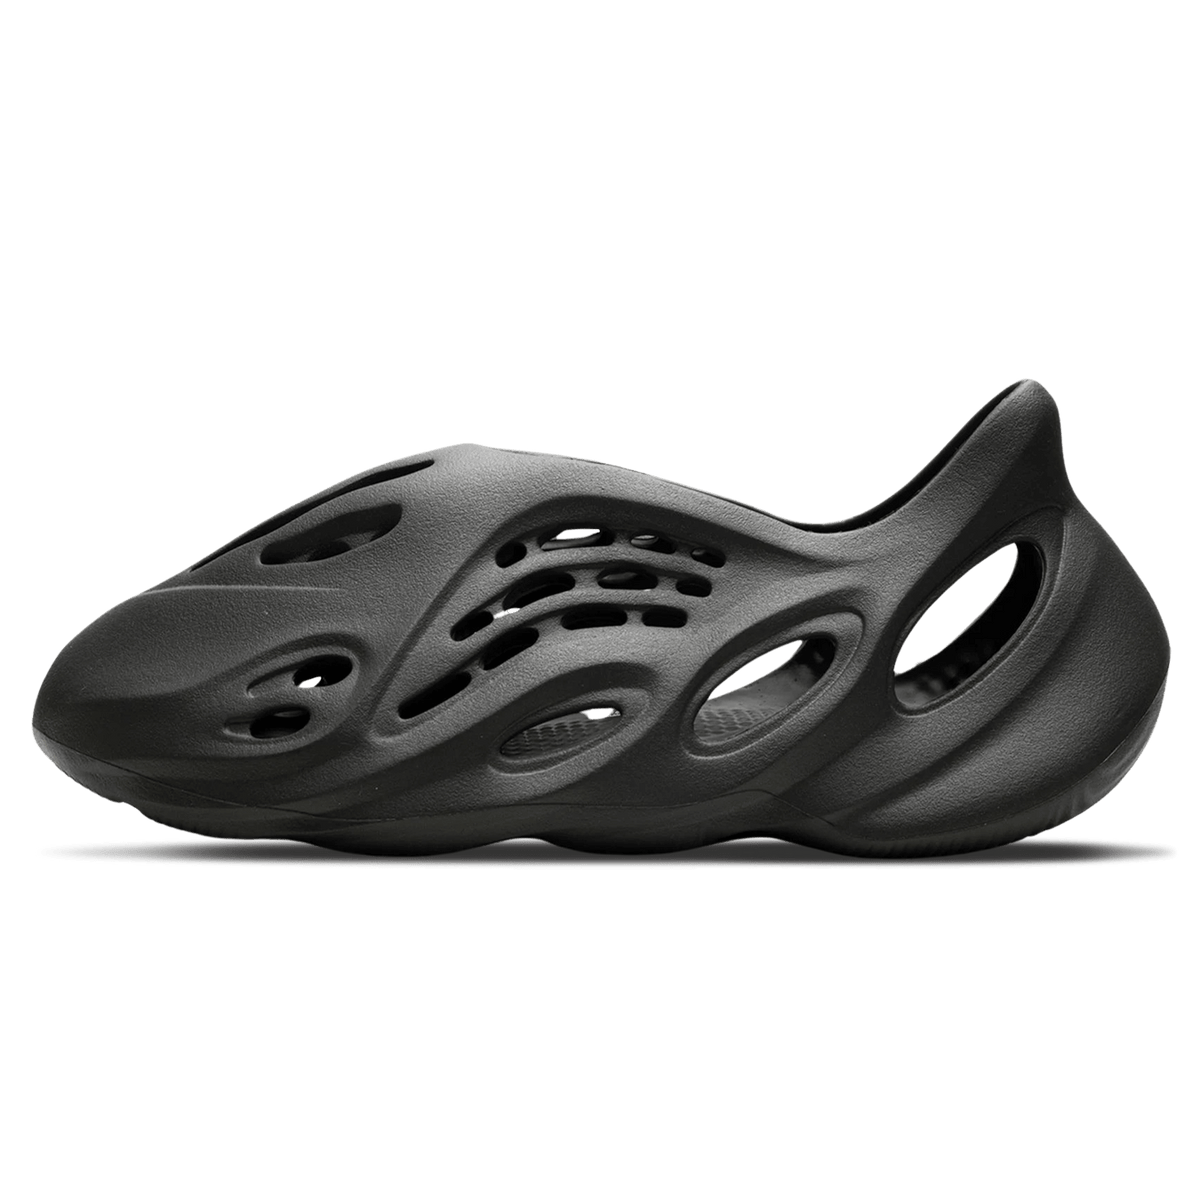 adidas Yeezy Foam Runner 'Carbon' - JuzsportsShops